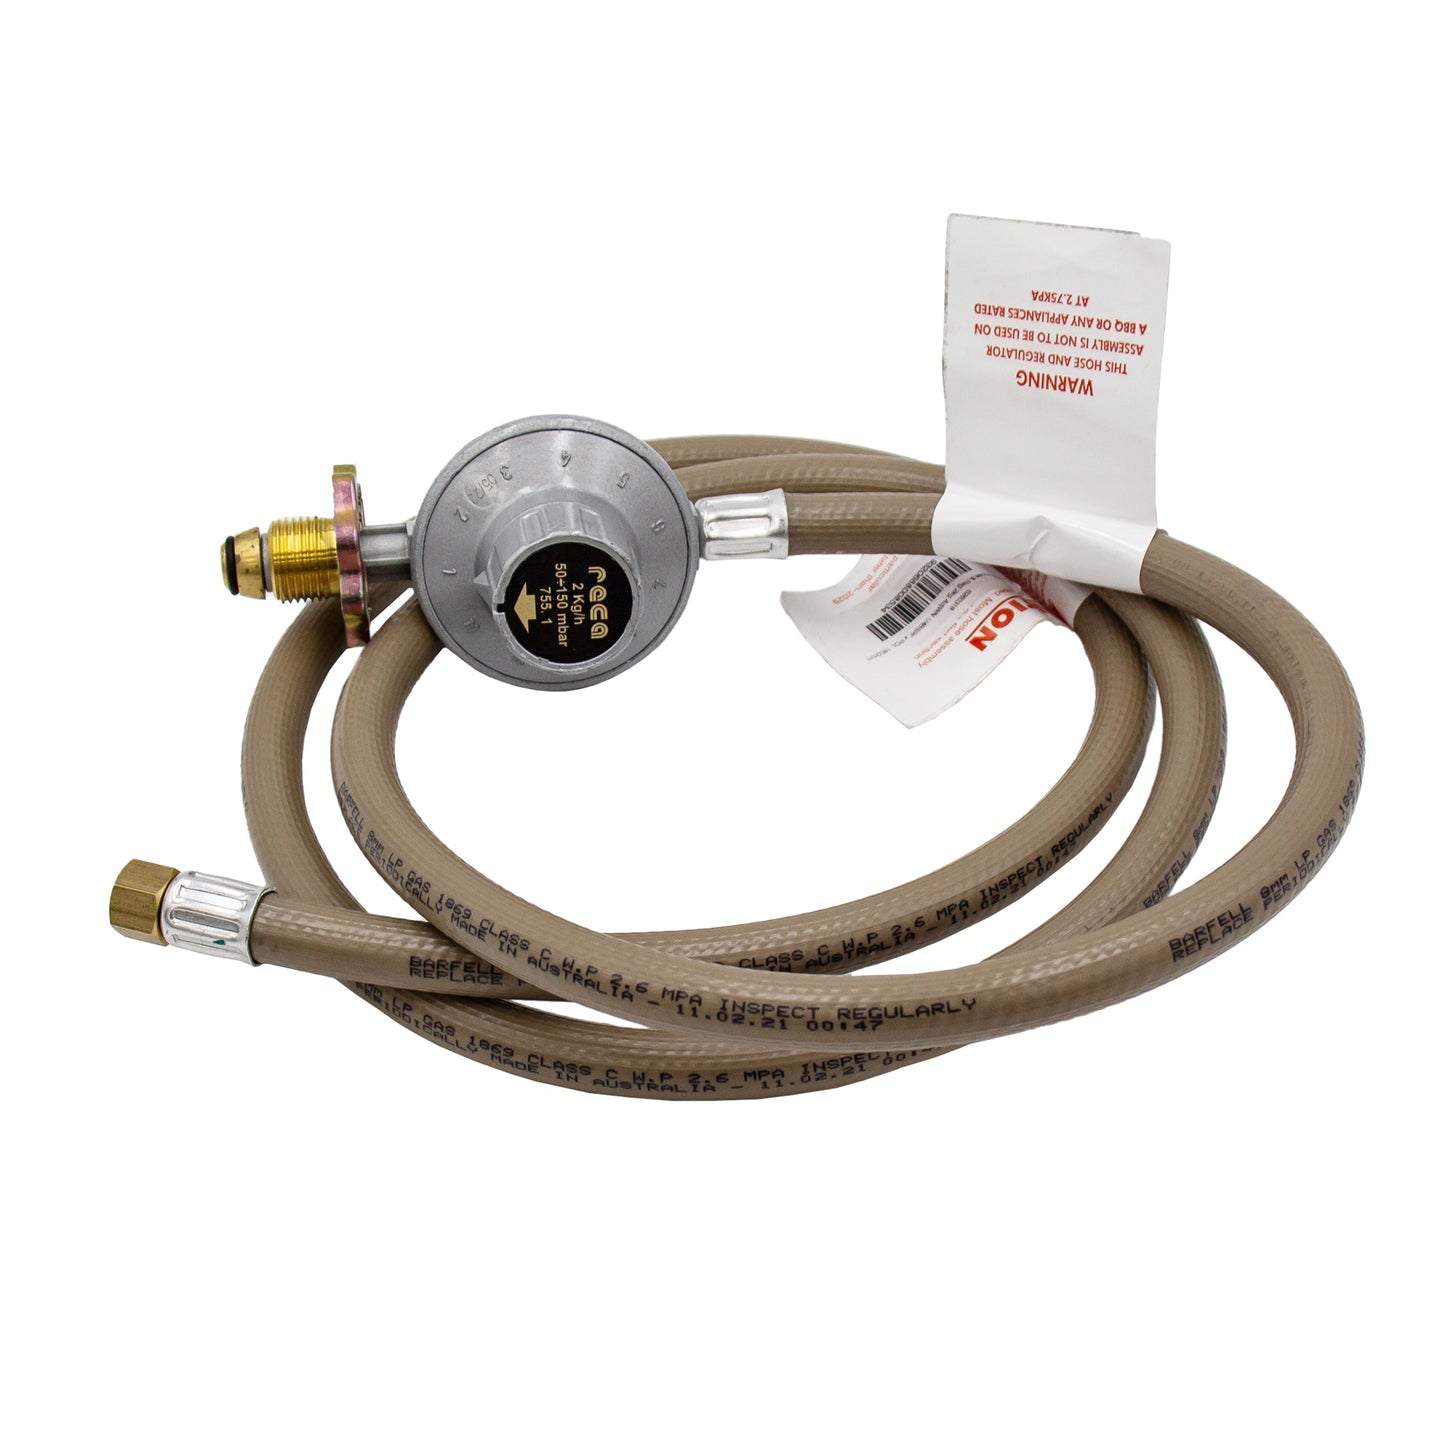 Adjustable gas regulator with 1800mm hose